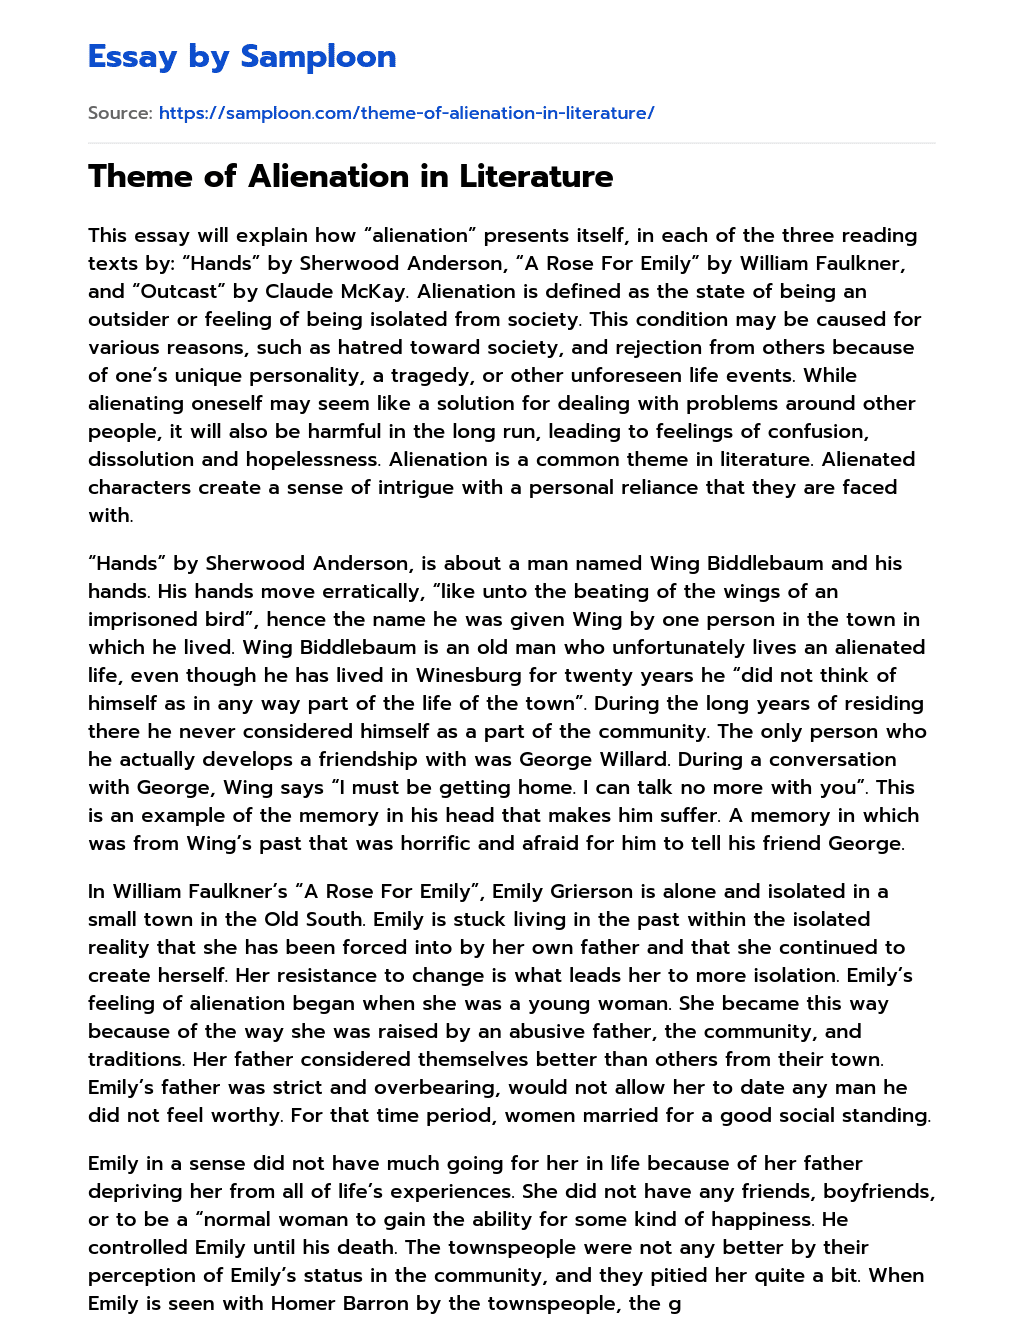 Theme of Alienation in Literature essay